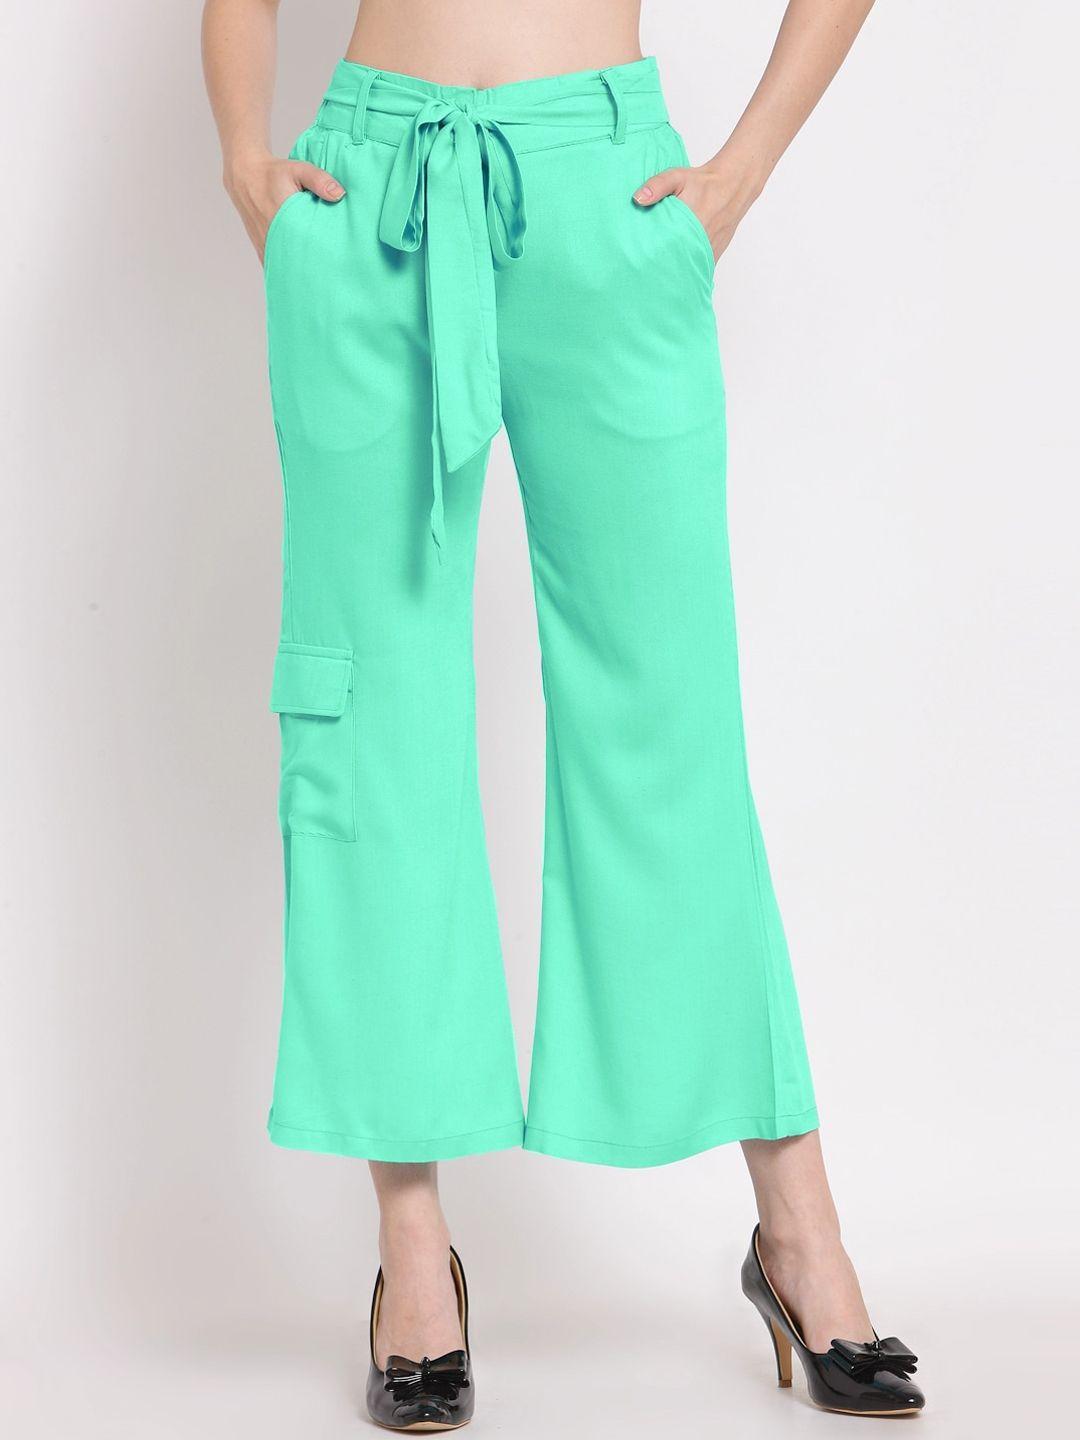 patrorna-women-smart-mid-rise-culottes-trousers